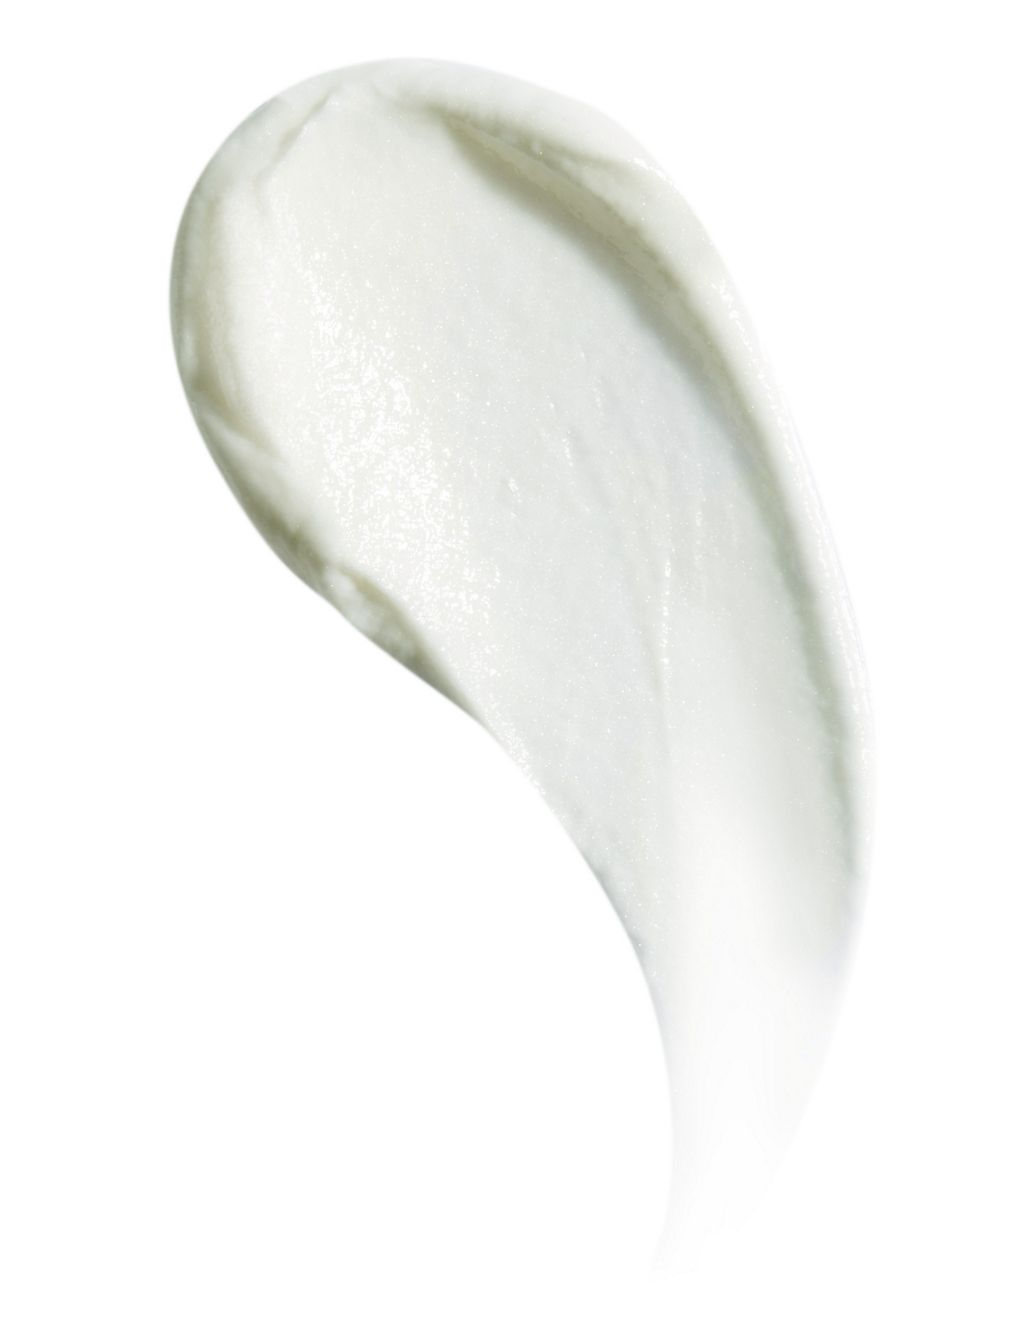 Nuxuriance Ultra Dry Cream 50ml 1 of 3